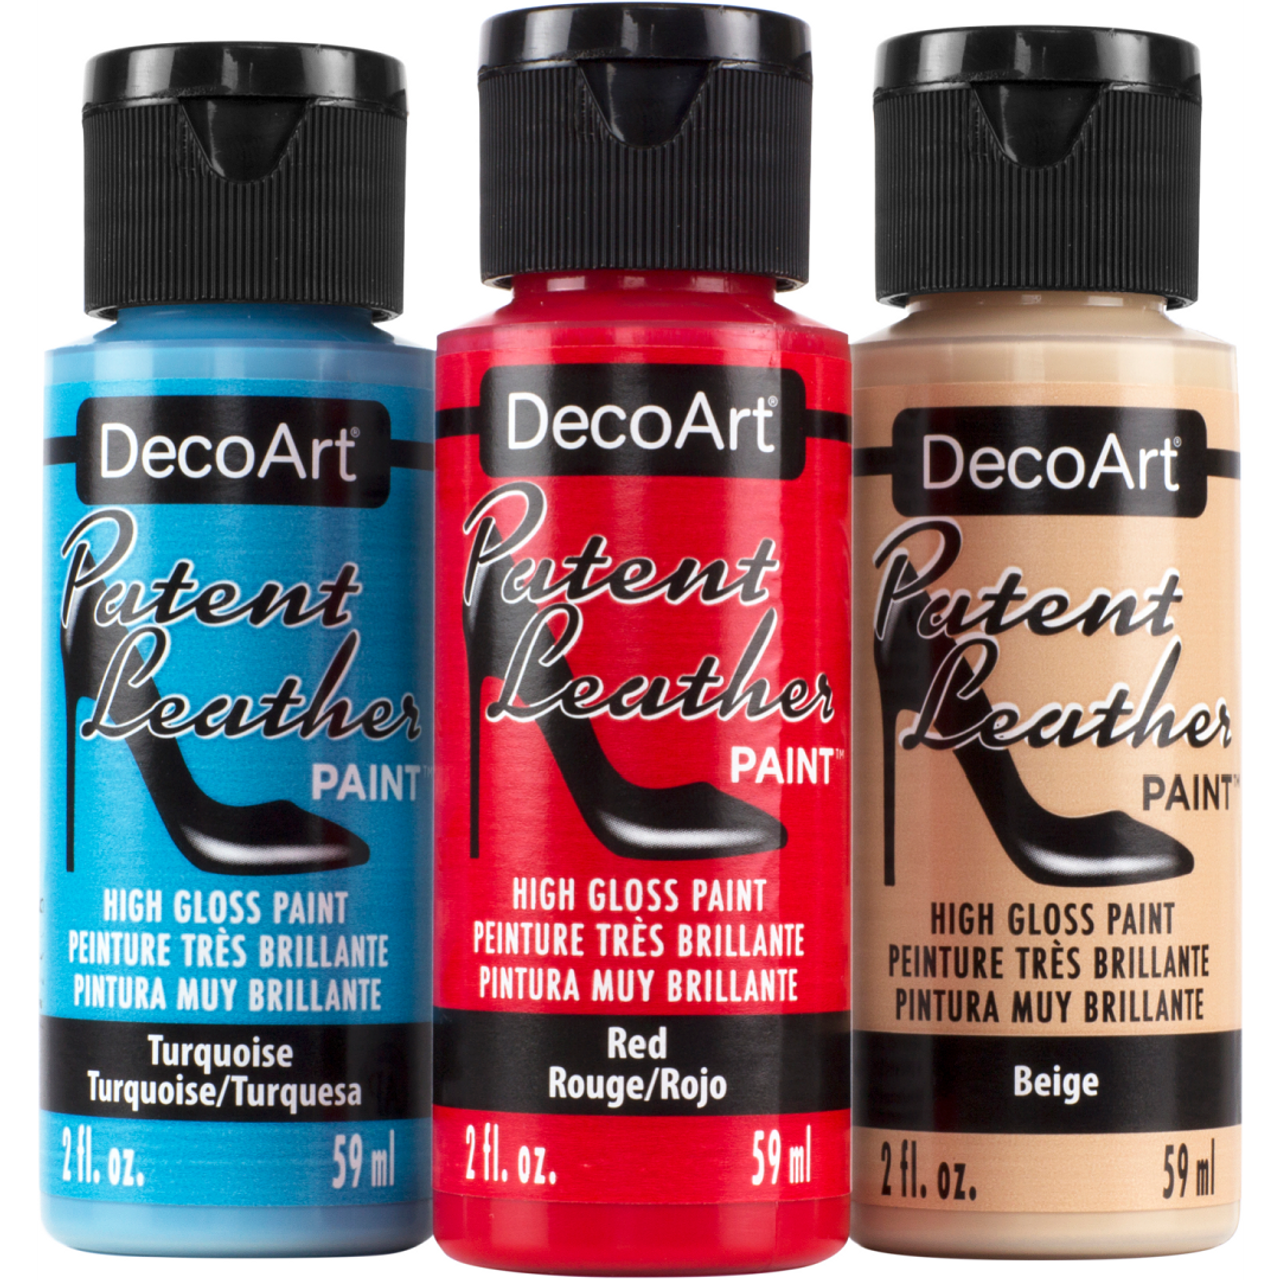 DecoArt Patent Leather - DecoArt Acrylic Paint and Art Supplies